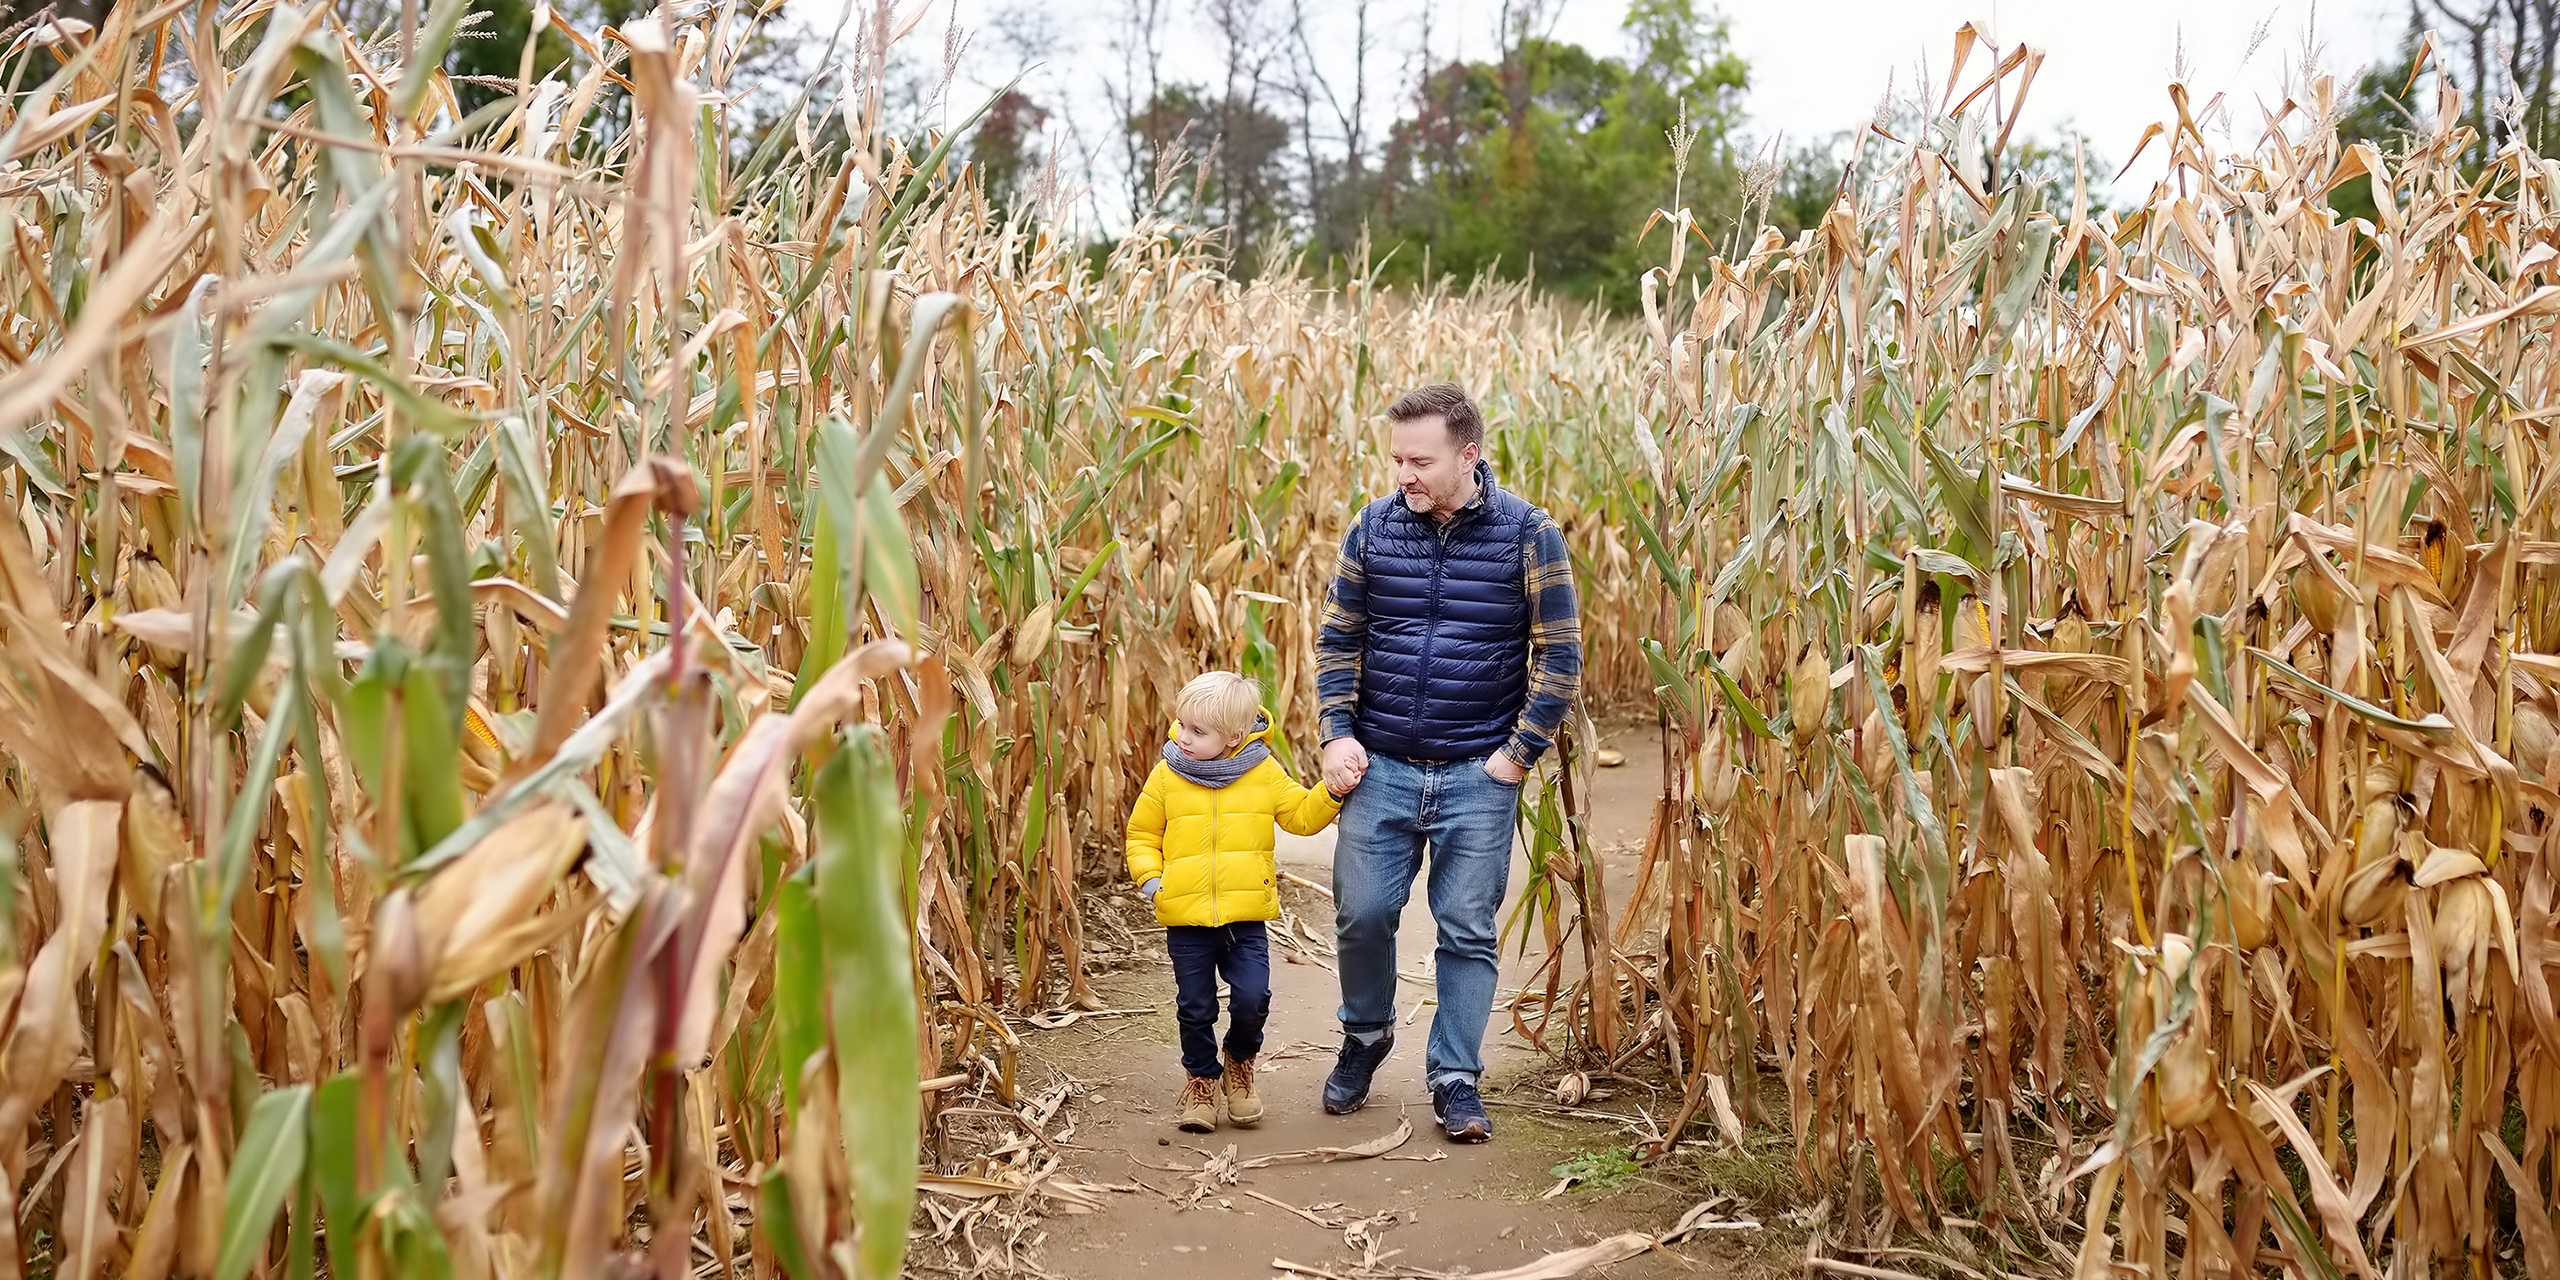 dad and son in corn maze; Courtesy of Maria Sbytova/Shutterstock